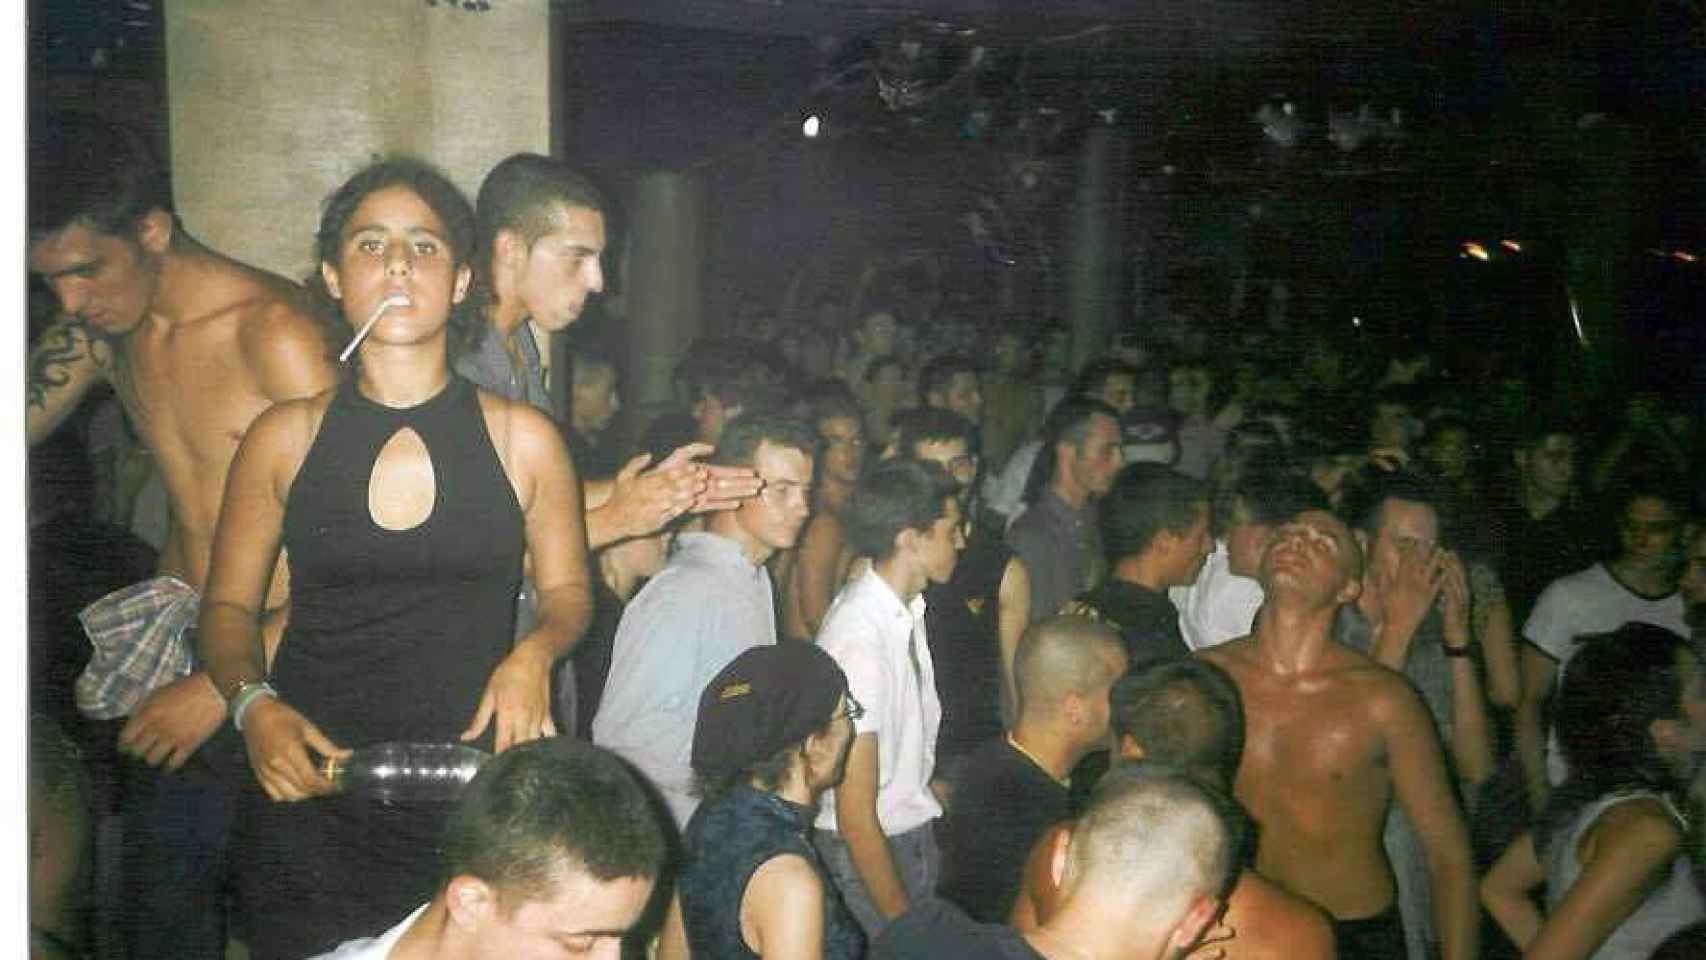 Una noche de makina en la discoteca Level de La Pineda de Salou